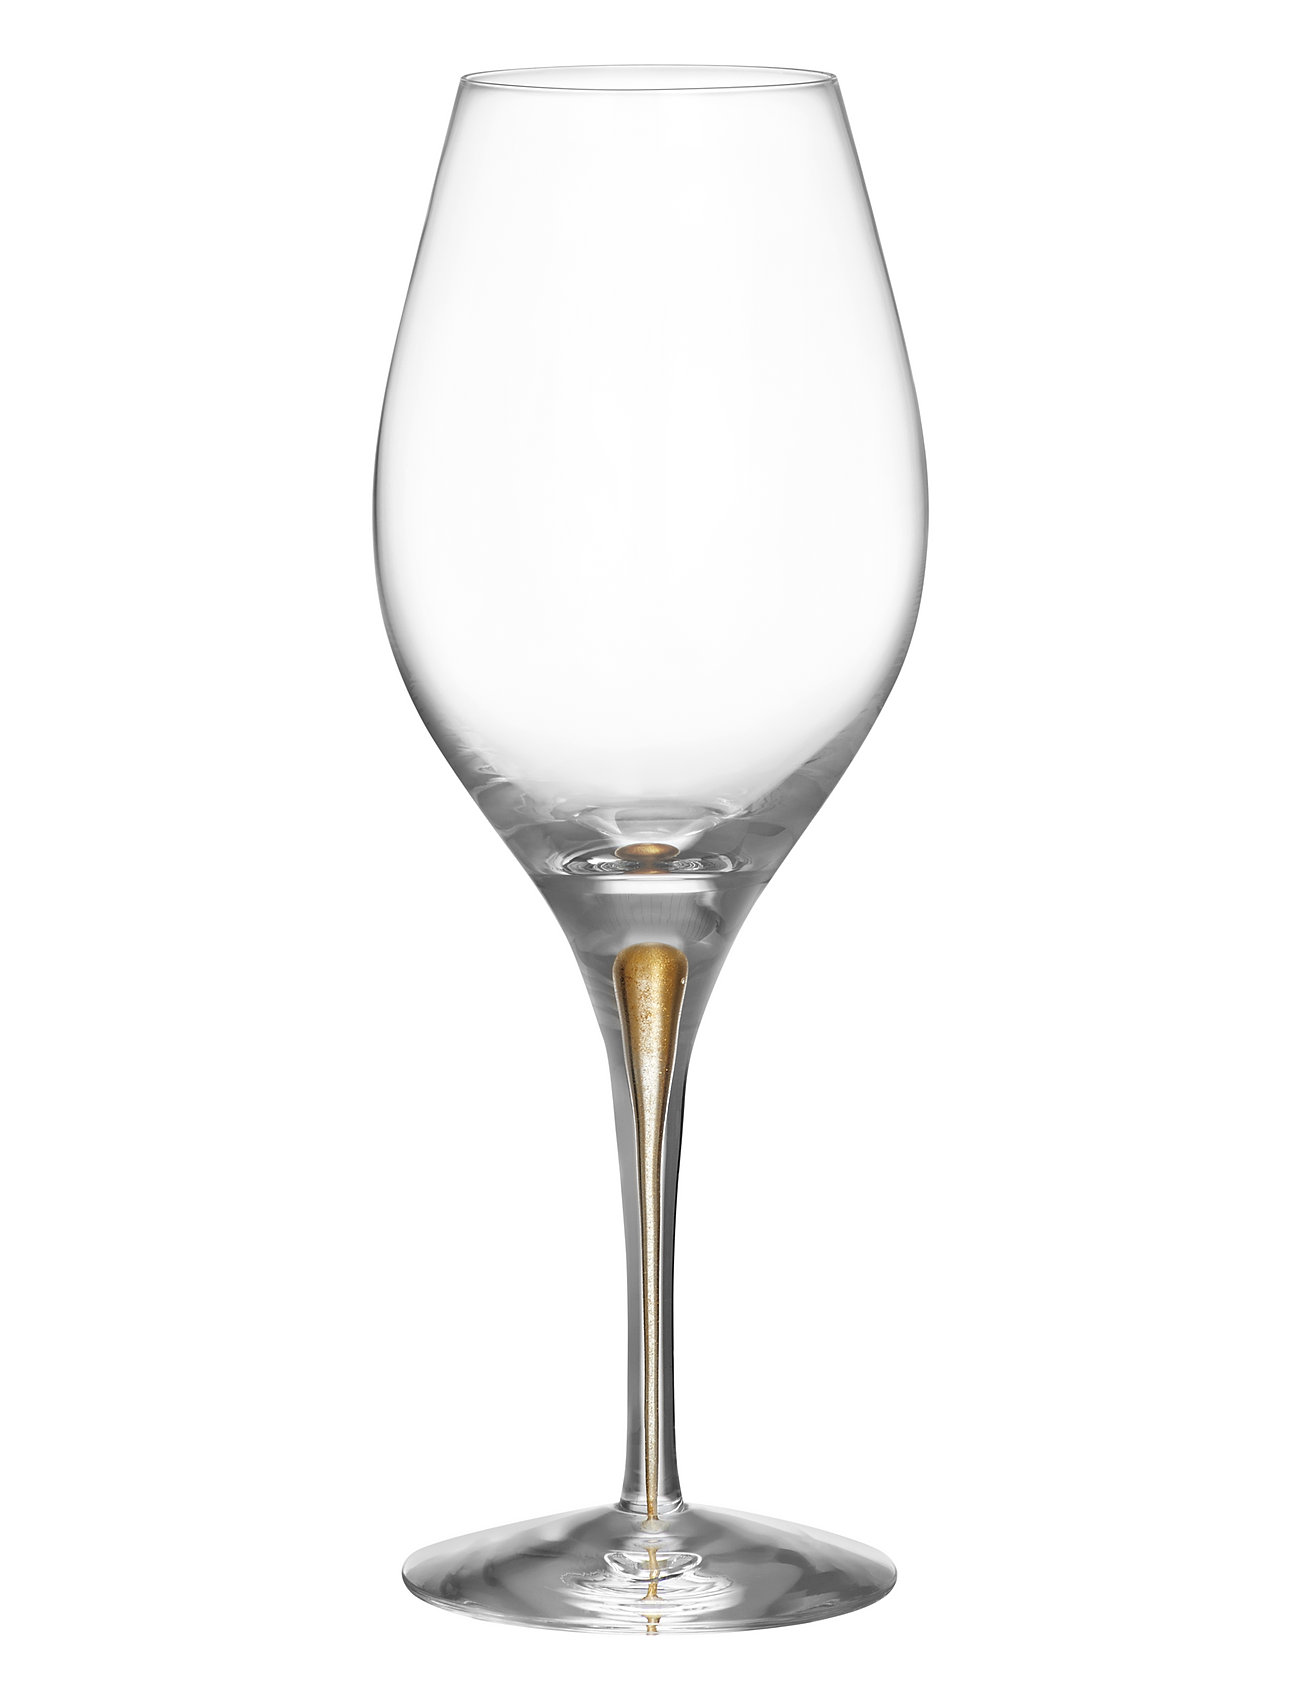 Intermezzo Balance Vinglas Home Tableware Glass Wine Glass Red Wine Glasses Nude Orrefors